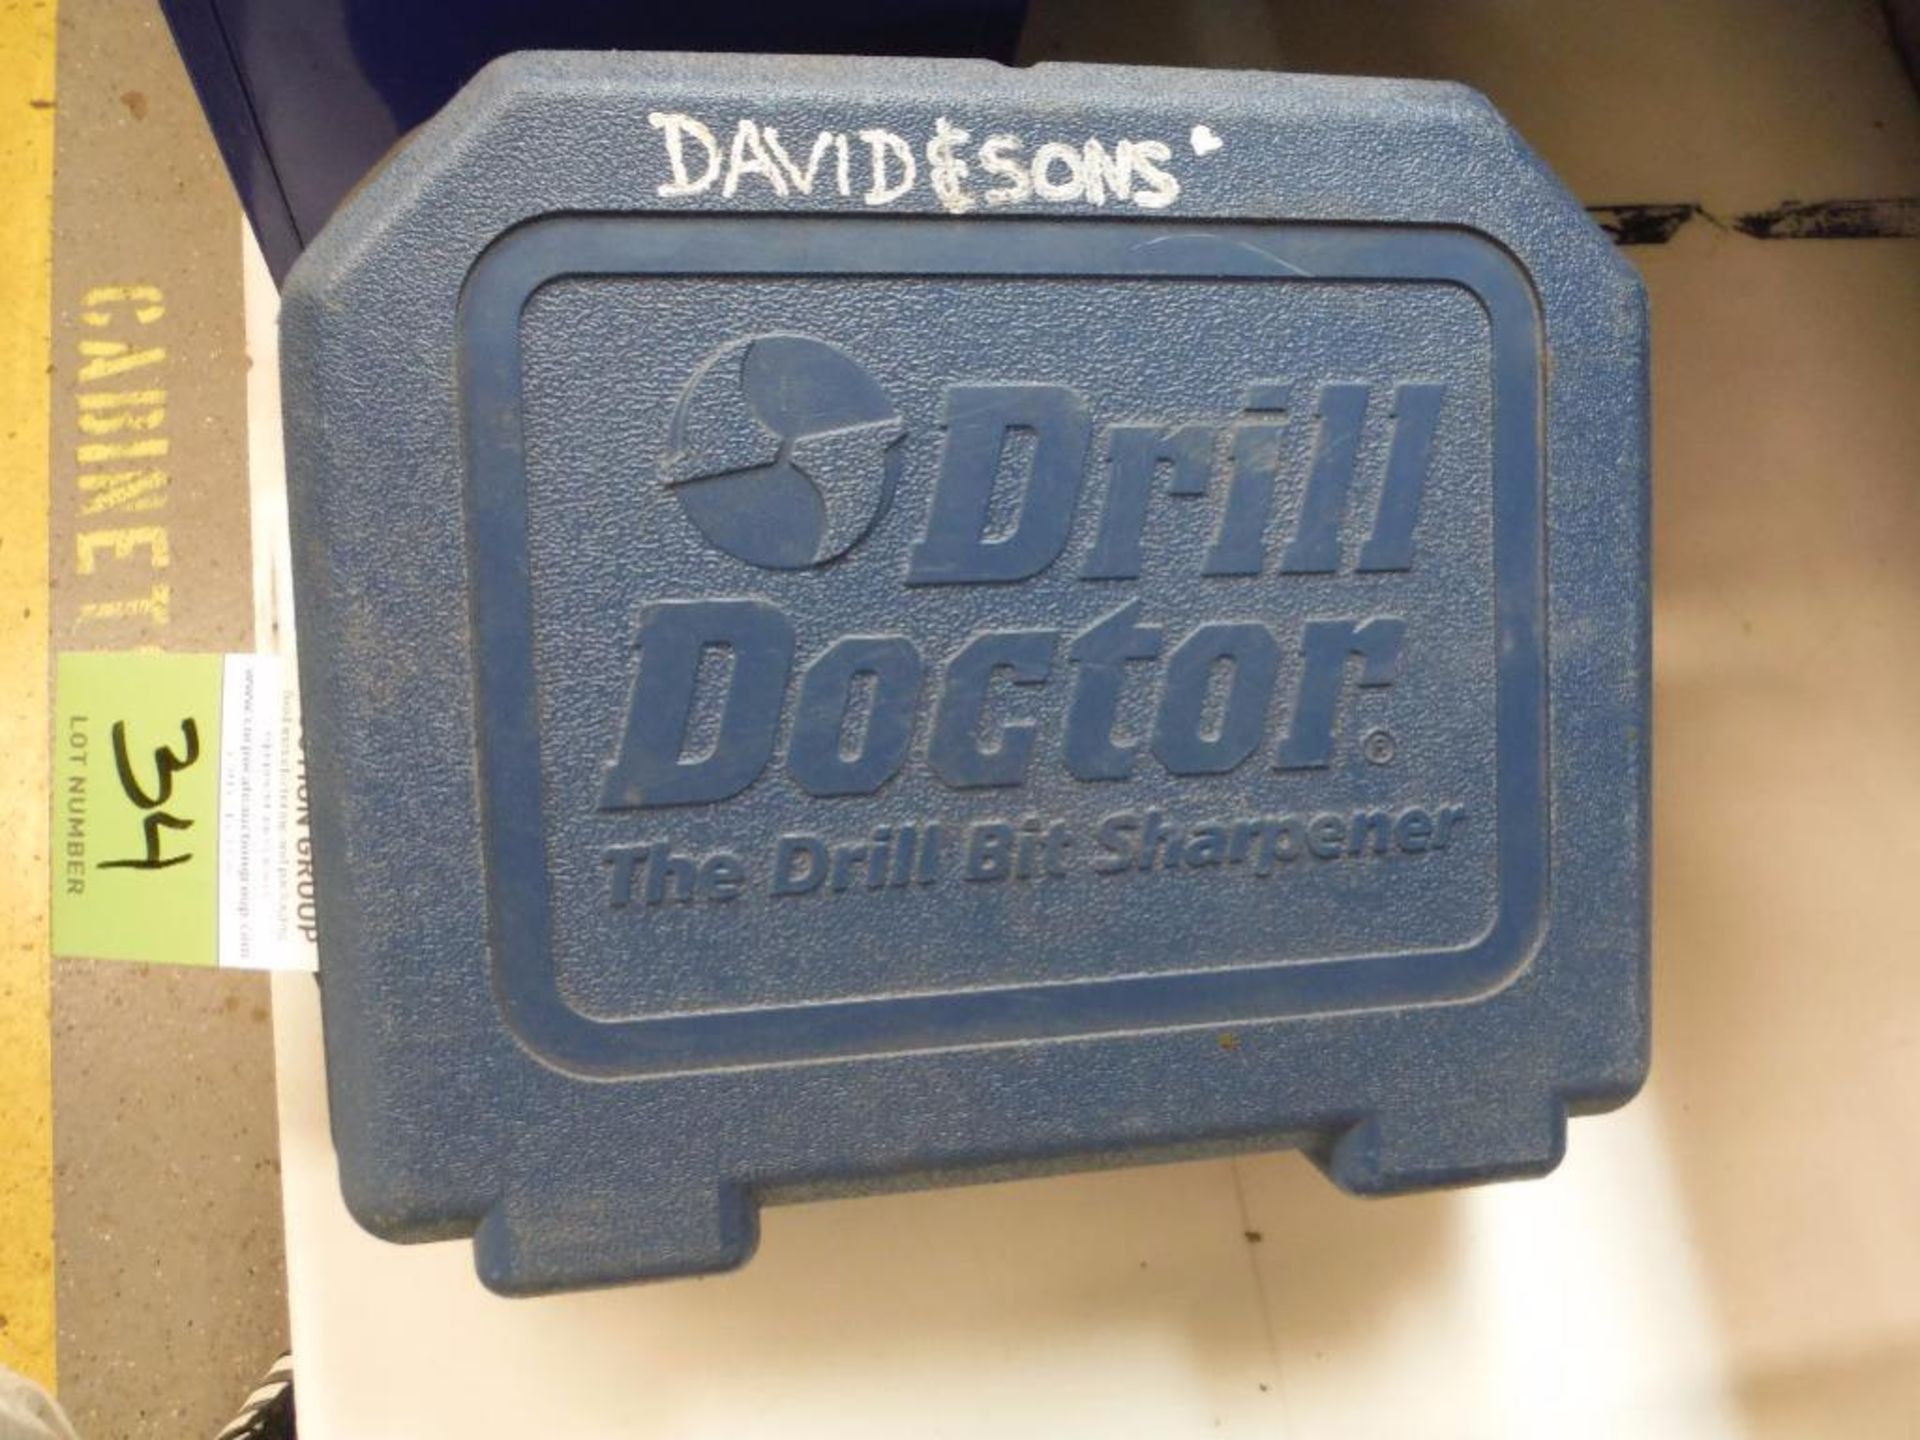 Drill doctor 750x drill bit sharpener ** Rigging Fee: $5 ** - Image 4 of 5